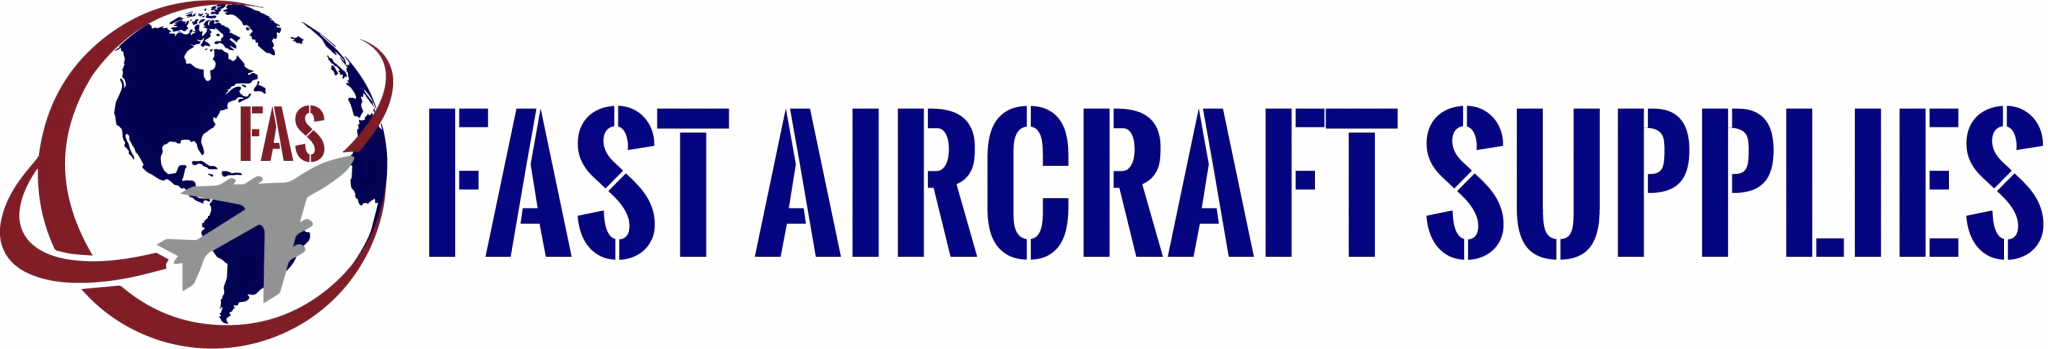 fast-aircrafts logo